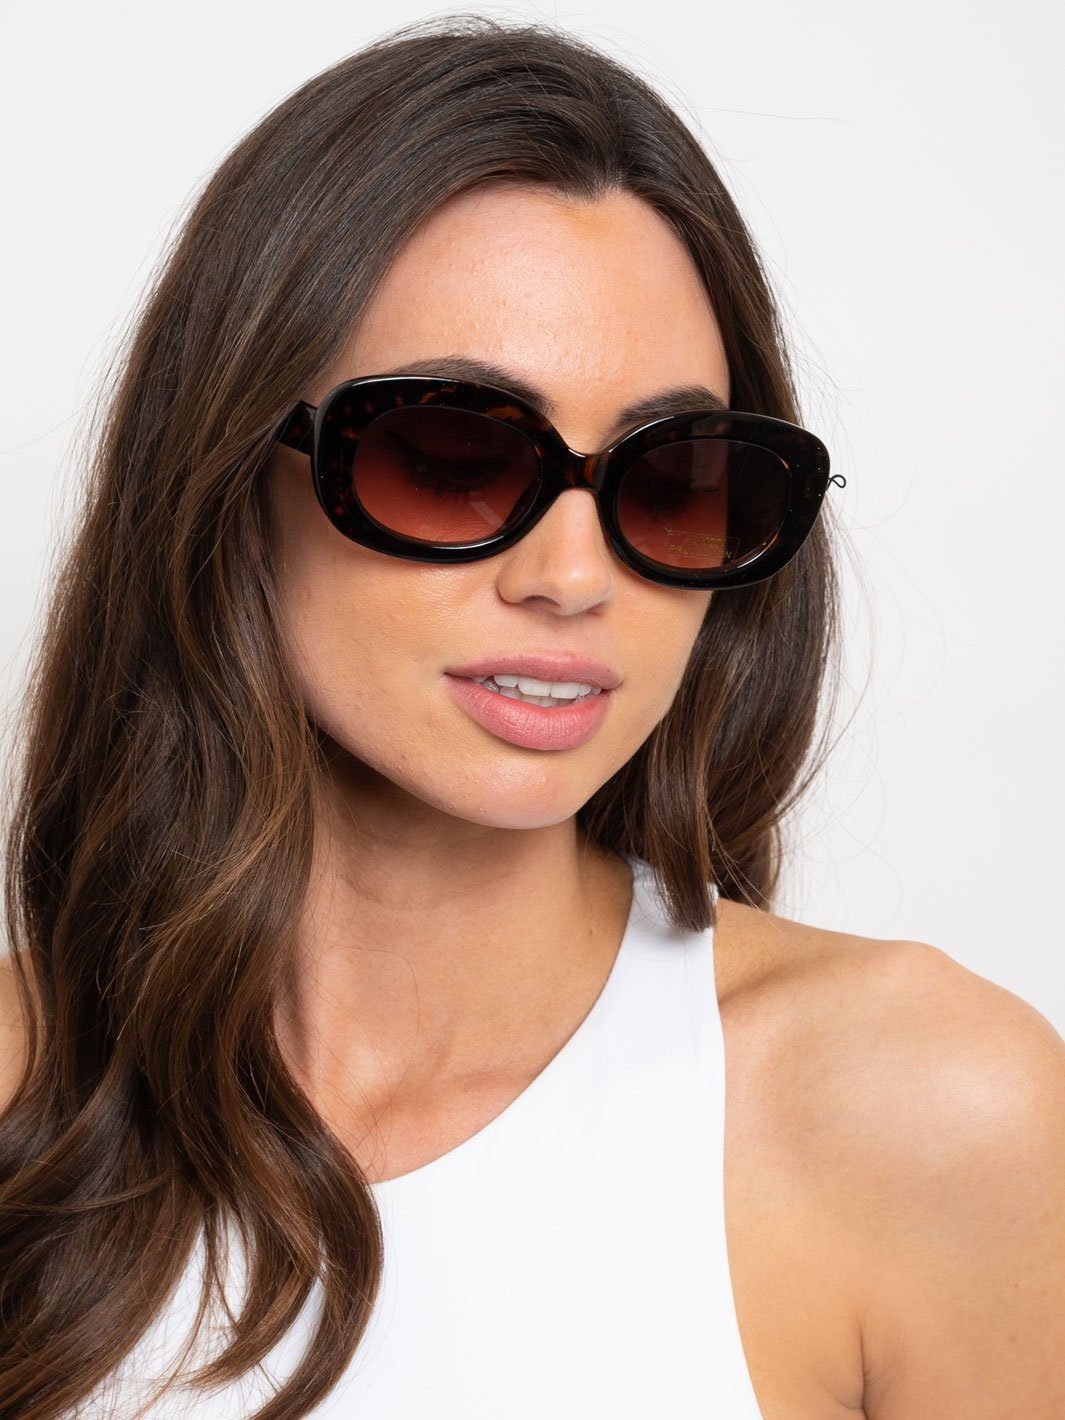 Women S Dazey Shades Fashion Eyewear Assorted Colors Sunglasses